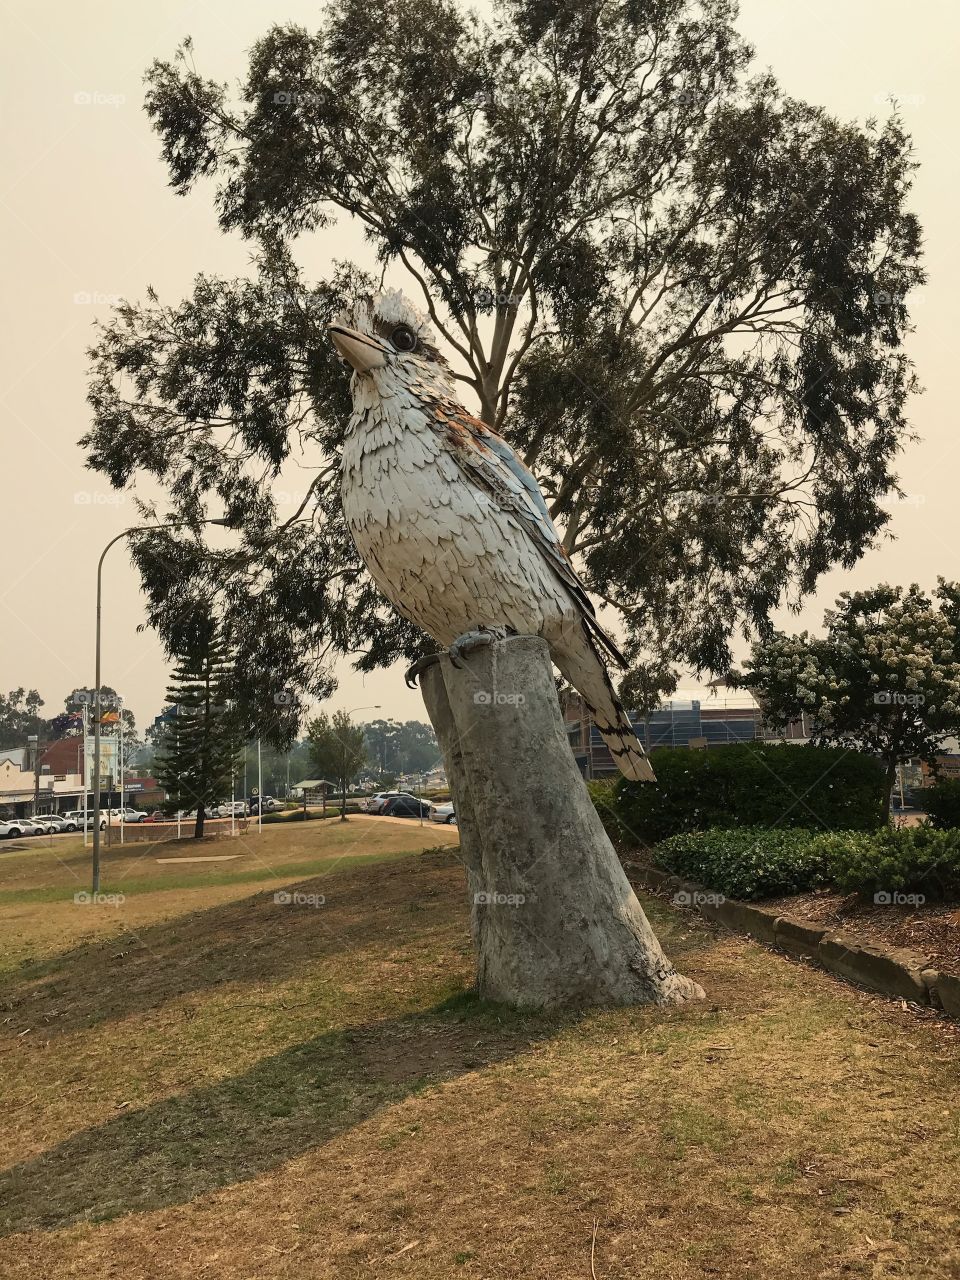 The Kookaburra in New South Wales Woodberry (Landmark)